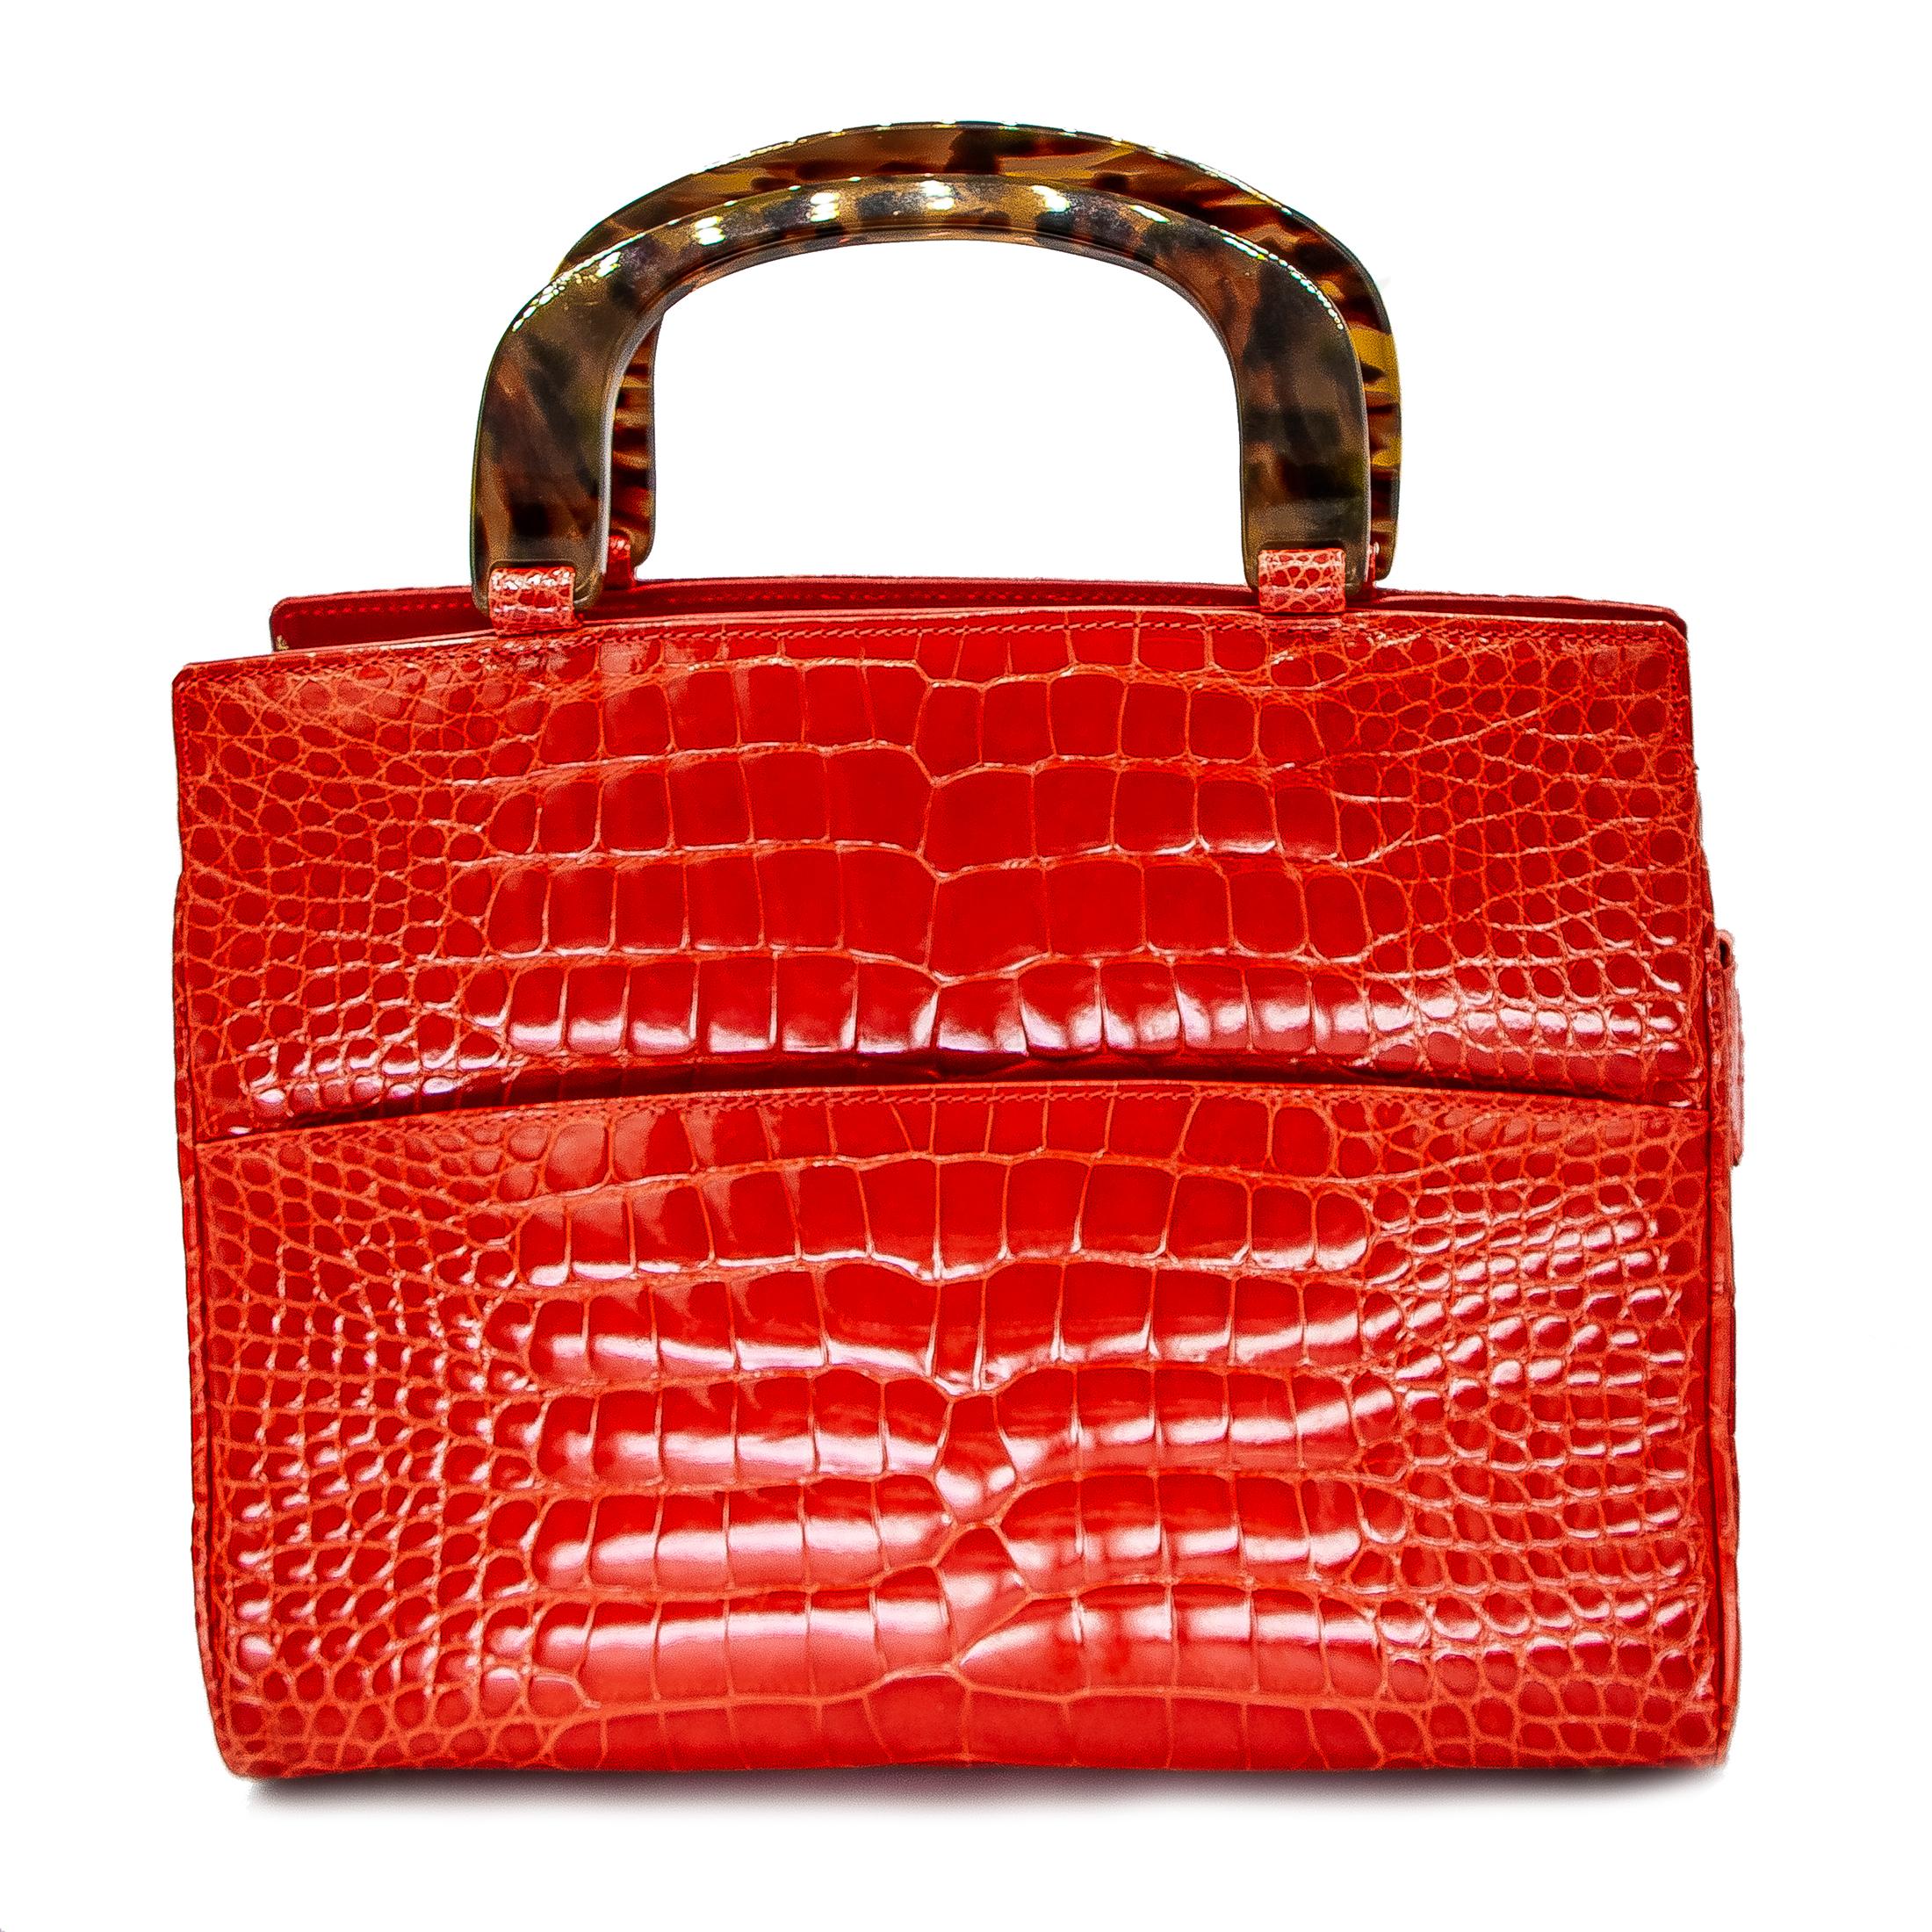 Lana Marks Fire Engine Red Alligator Handbag 4